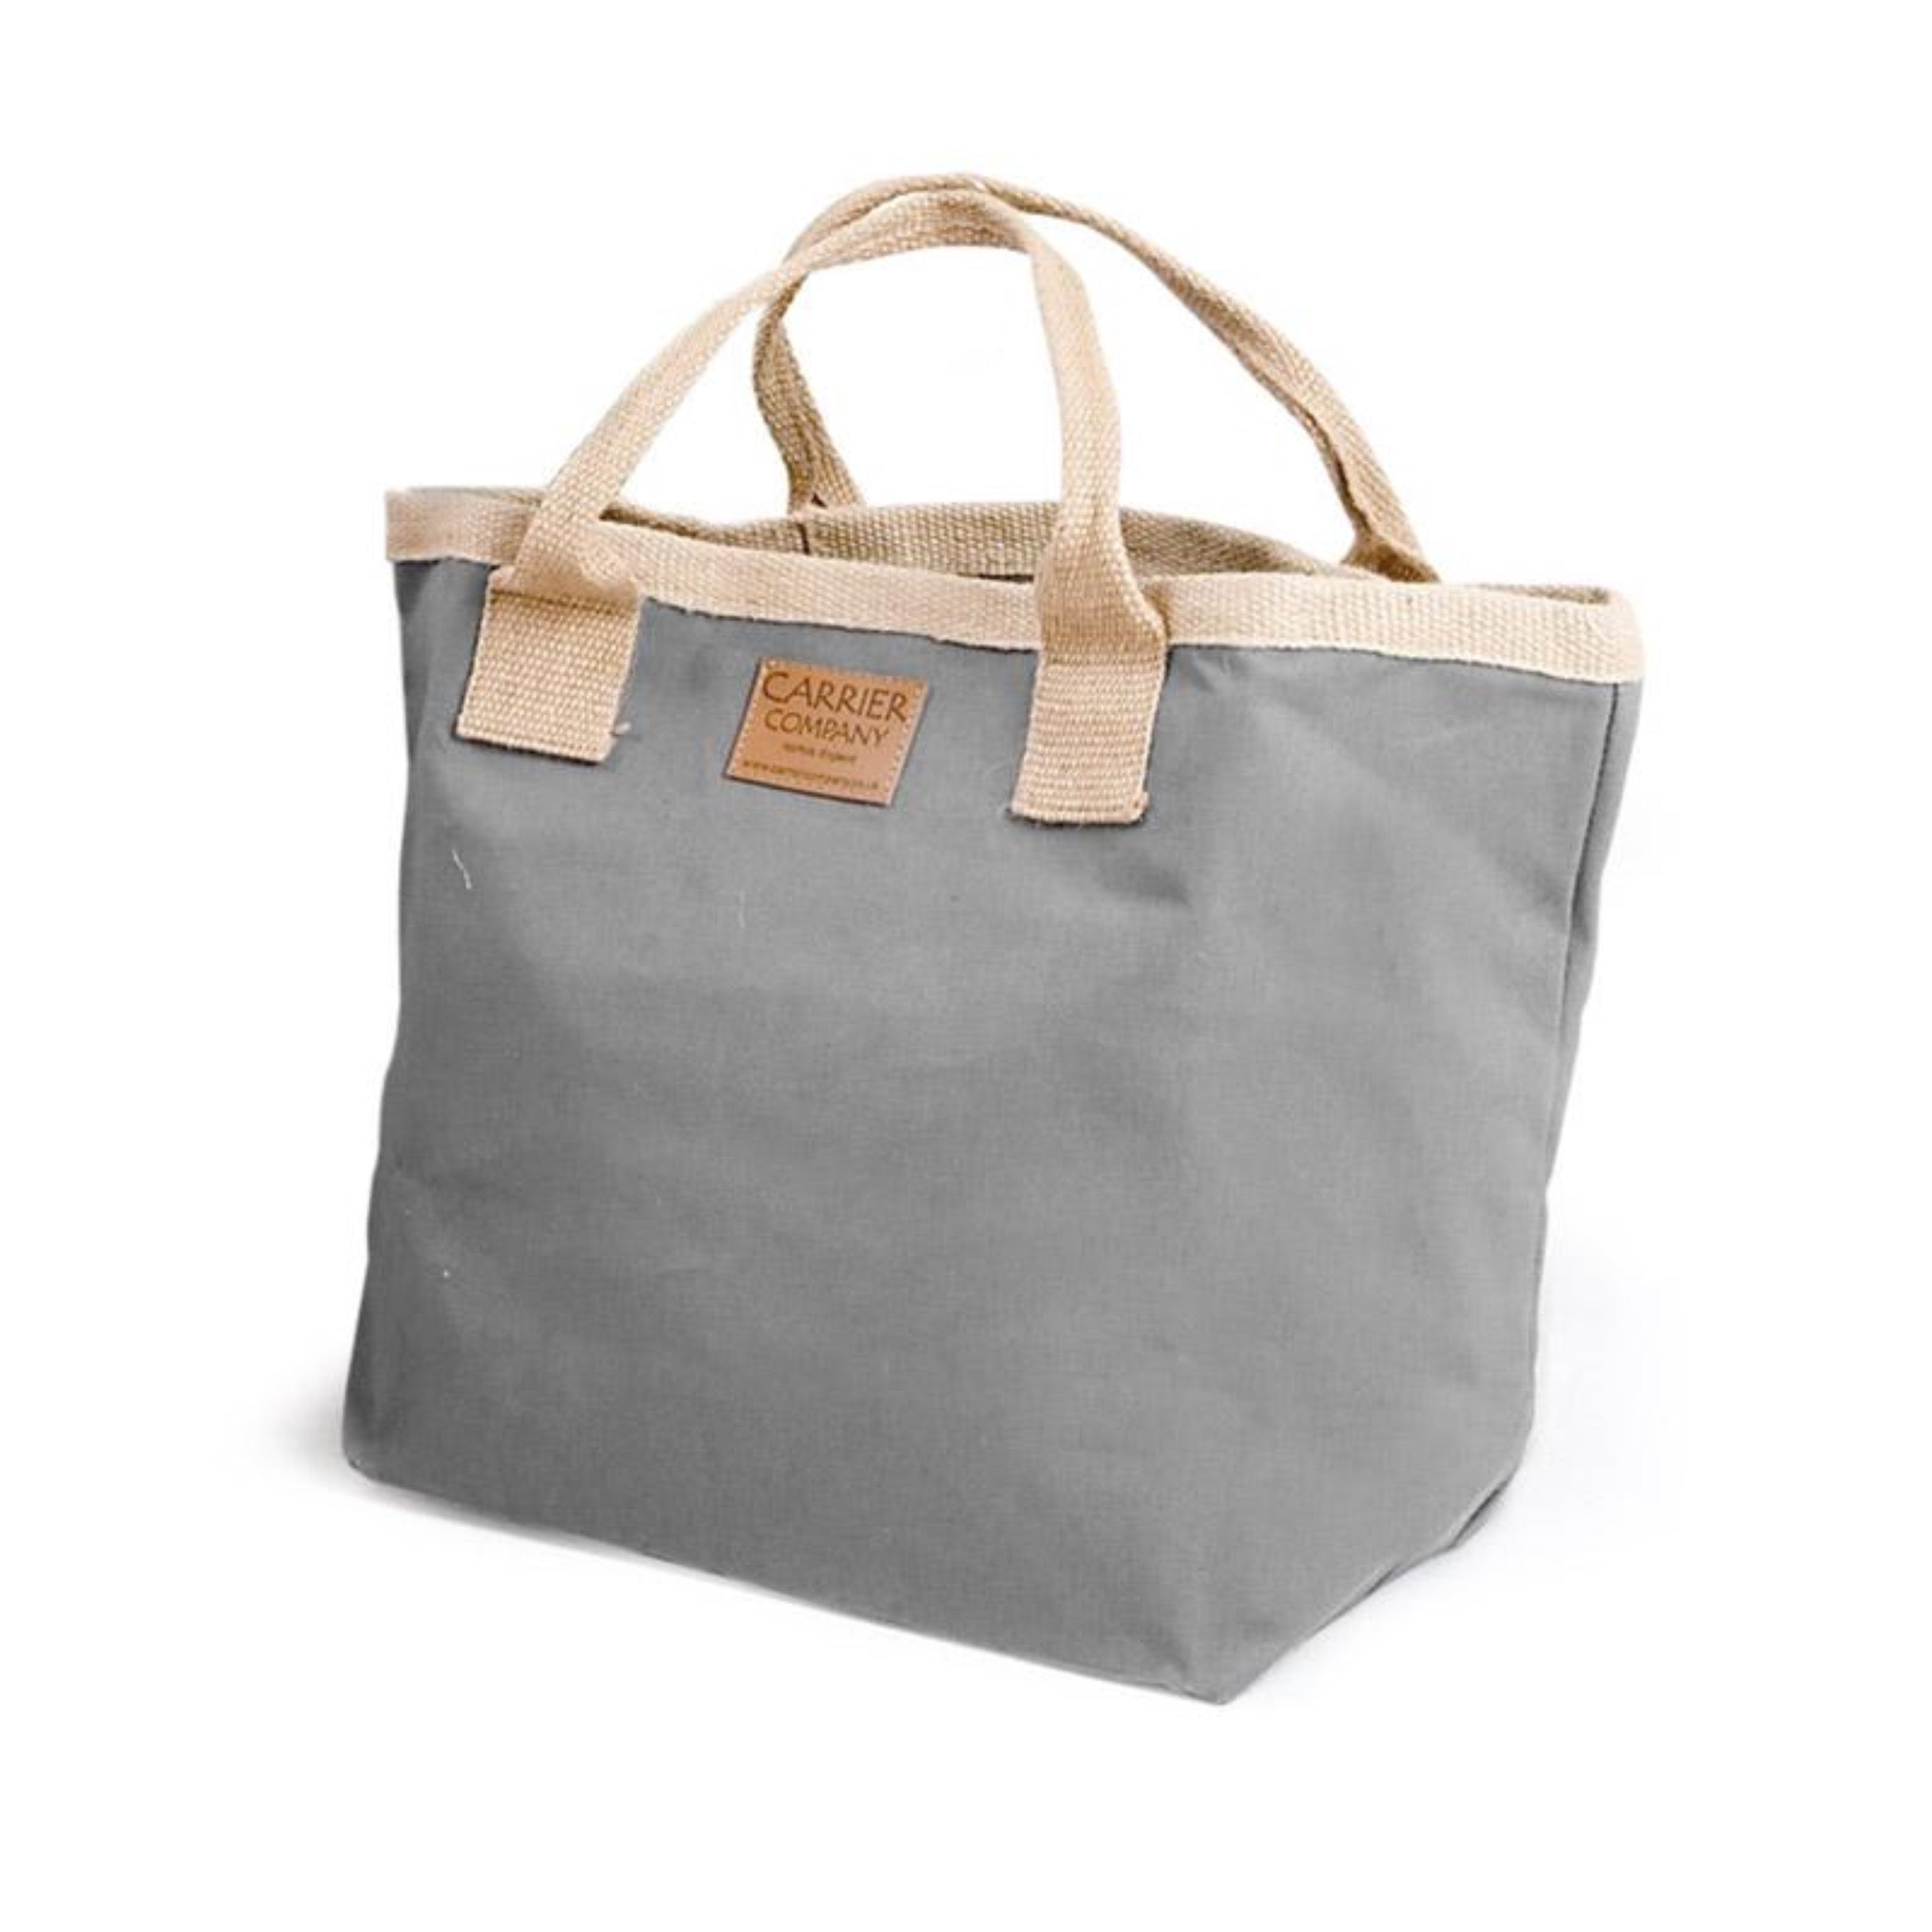 Carrier Bag | Canvas Tote | Canvas Shopper | Carrier Company